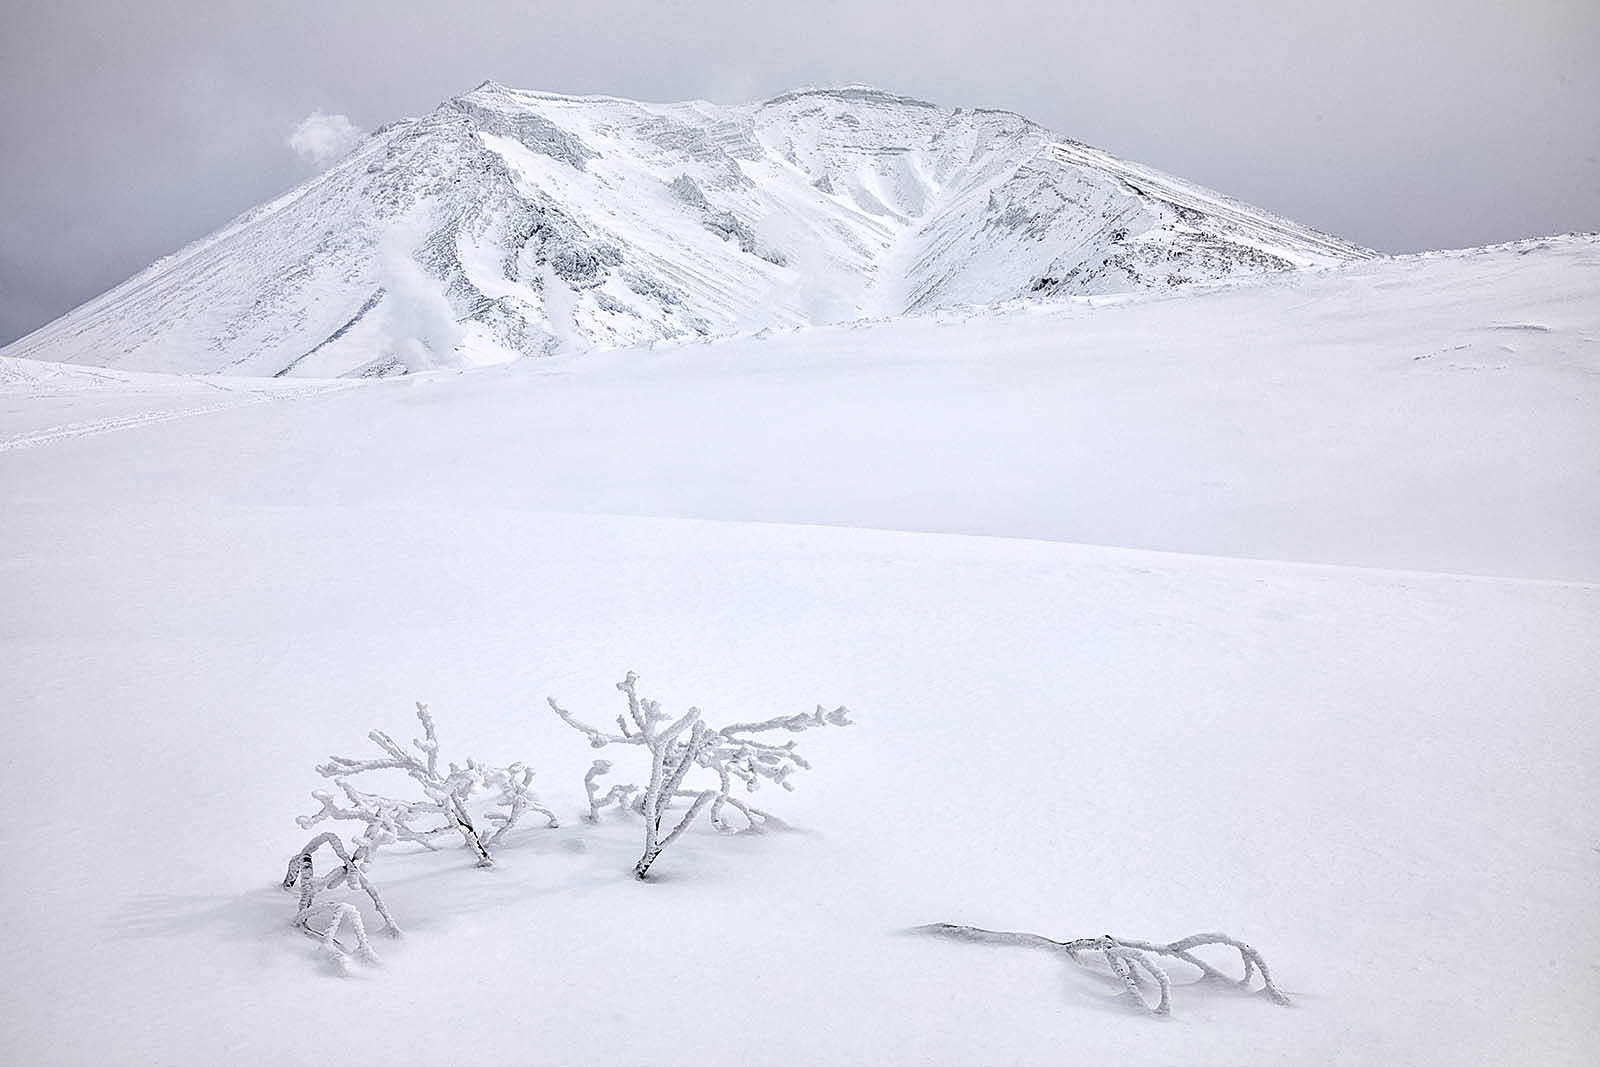 Snowy image of Mt. Asahi